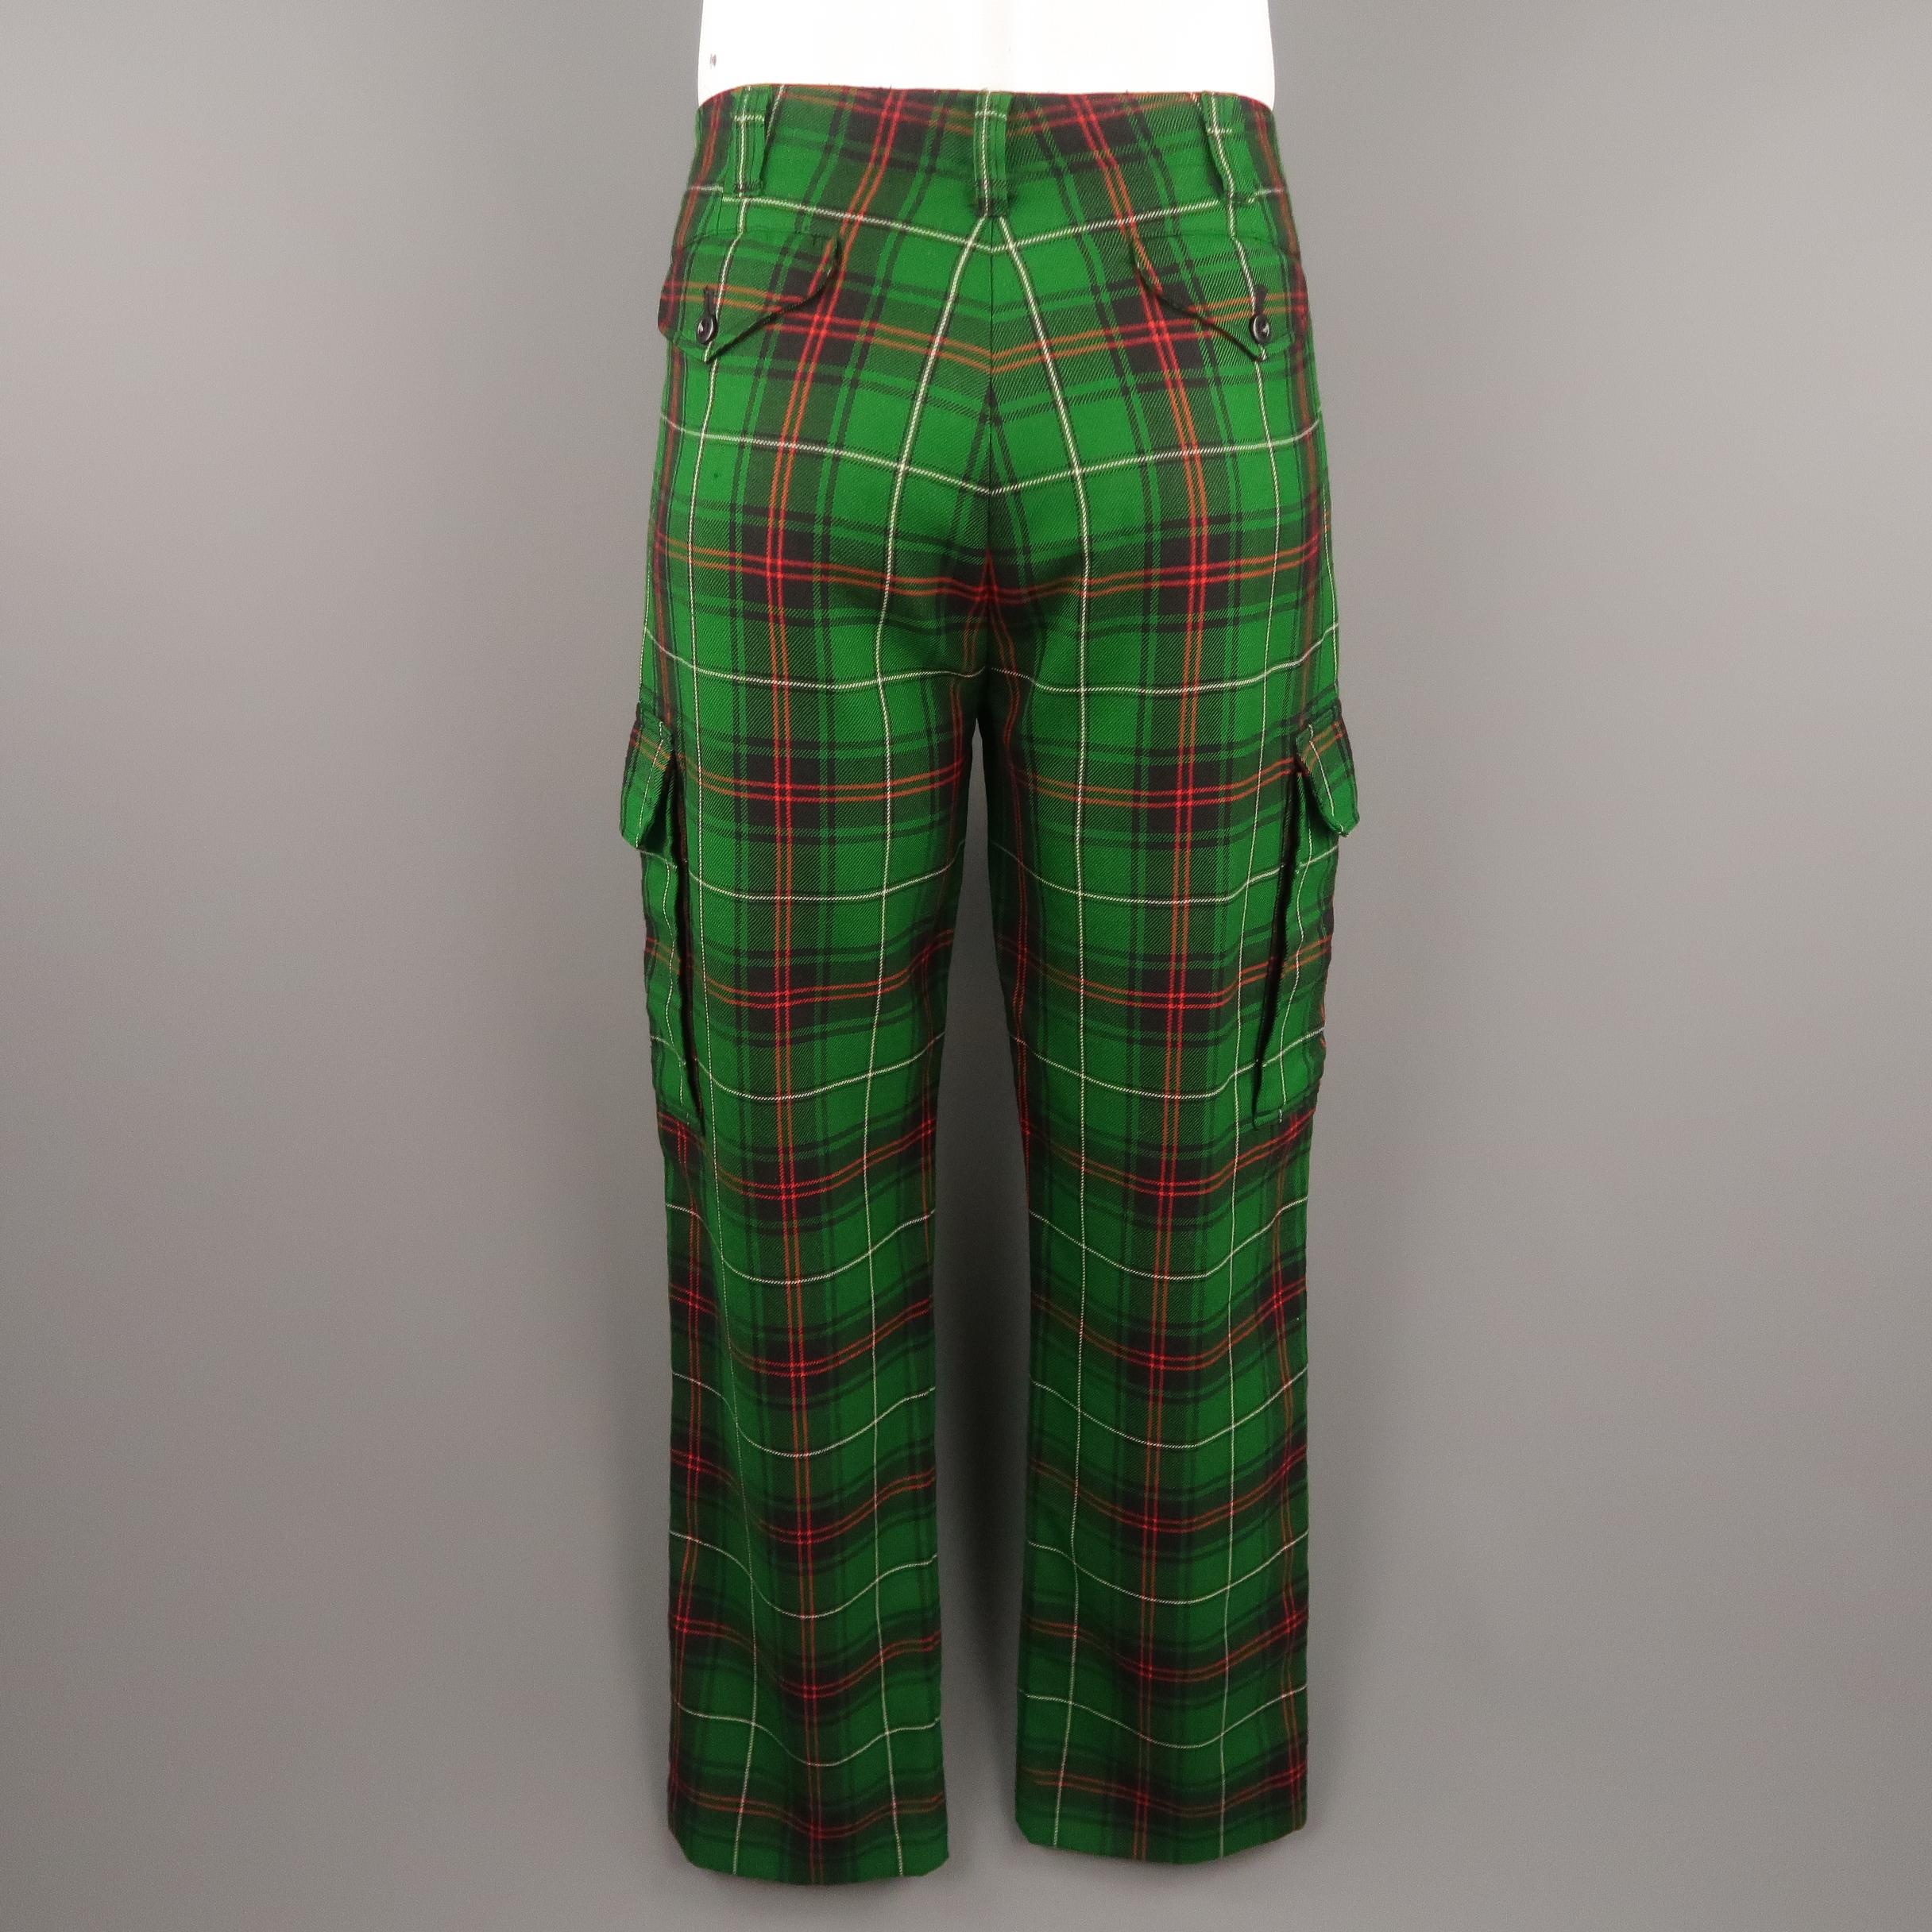 Black RALPH LAUREN Size 35 Green& Red Plaid Wool Cargo Pocket Pants